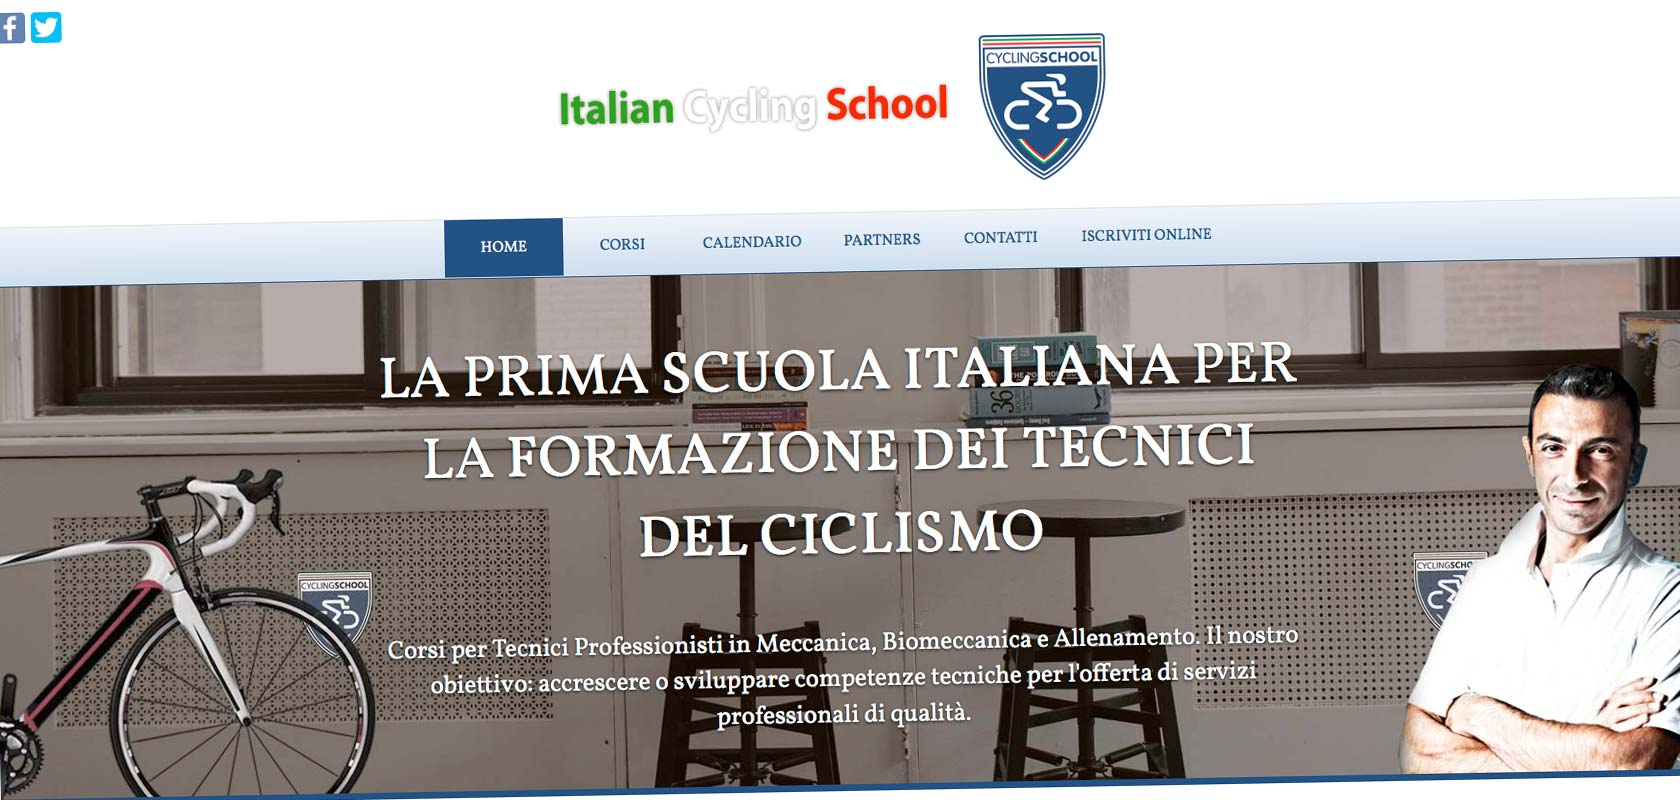 Italian Cycling School - TidiWeb